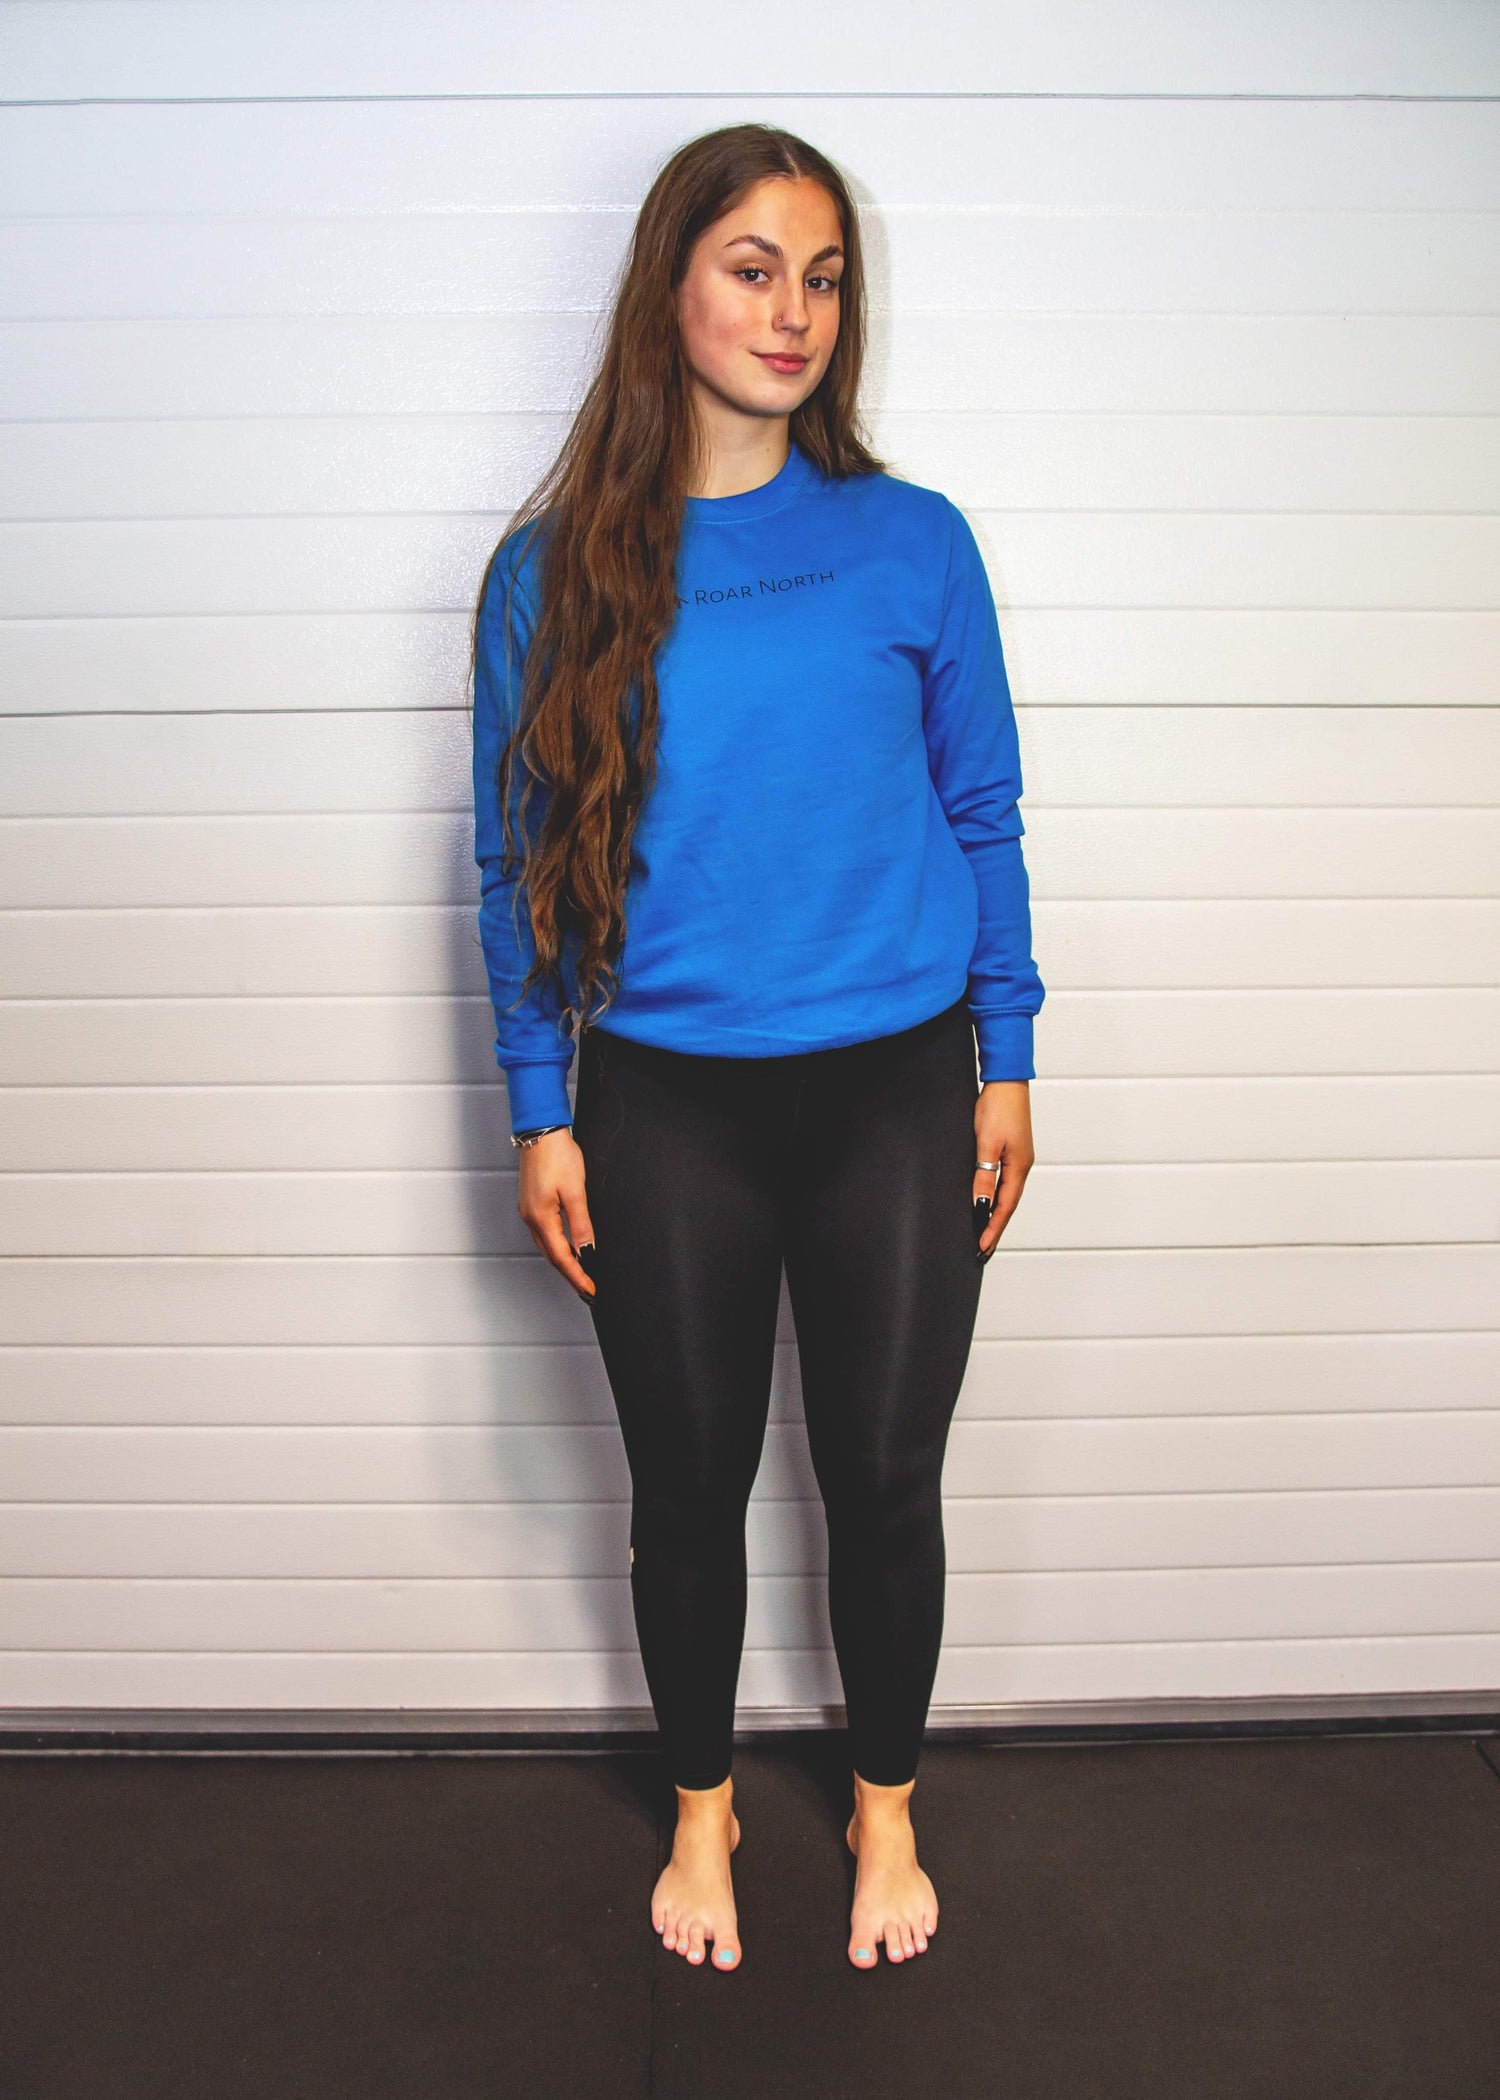 Blue unisex sweatshirt